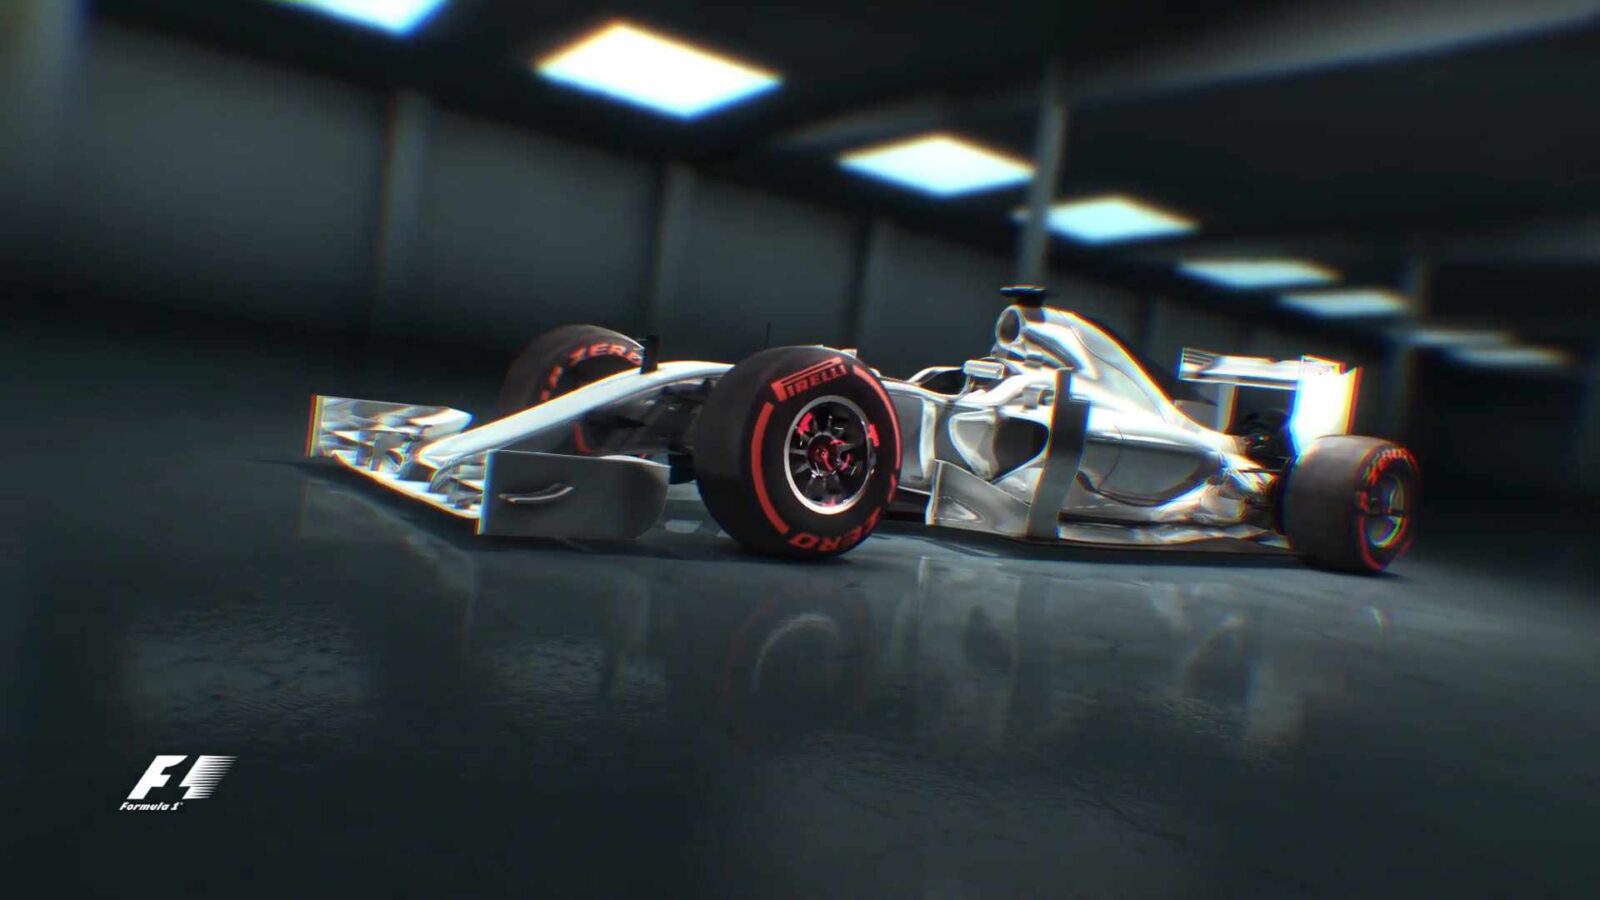 F1 Formula 1 – Free Live Wallpaper